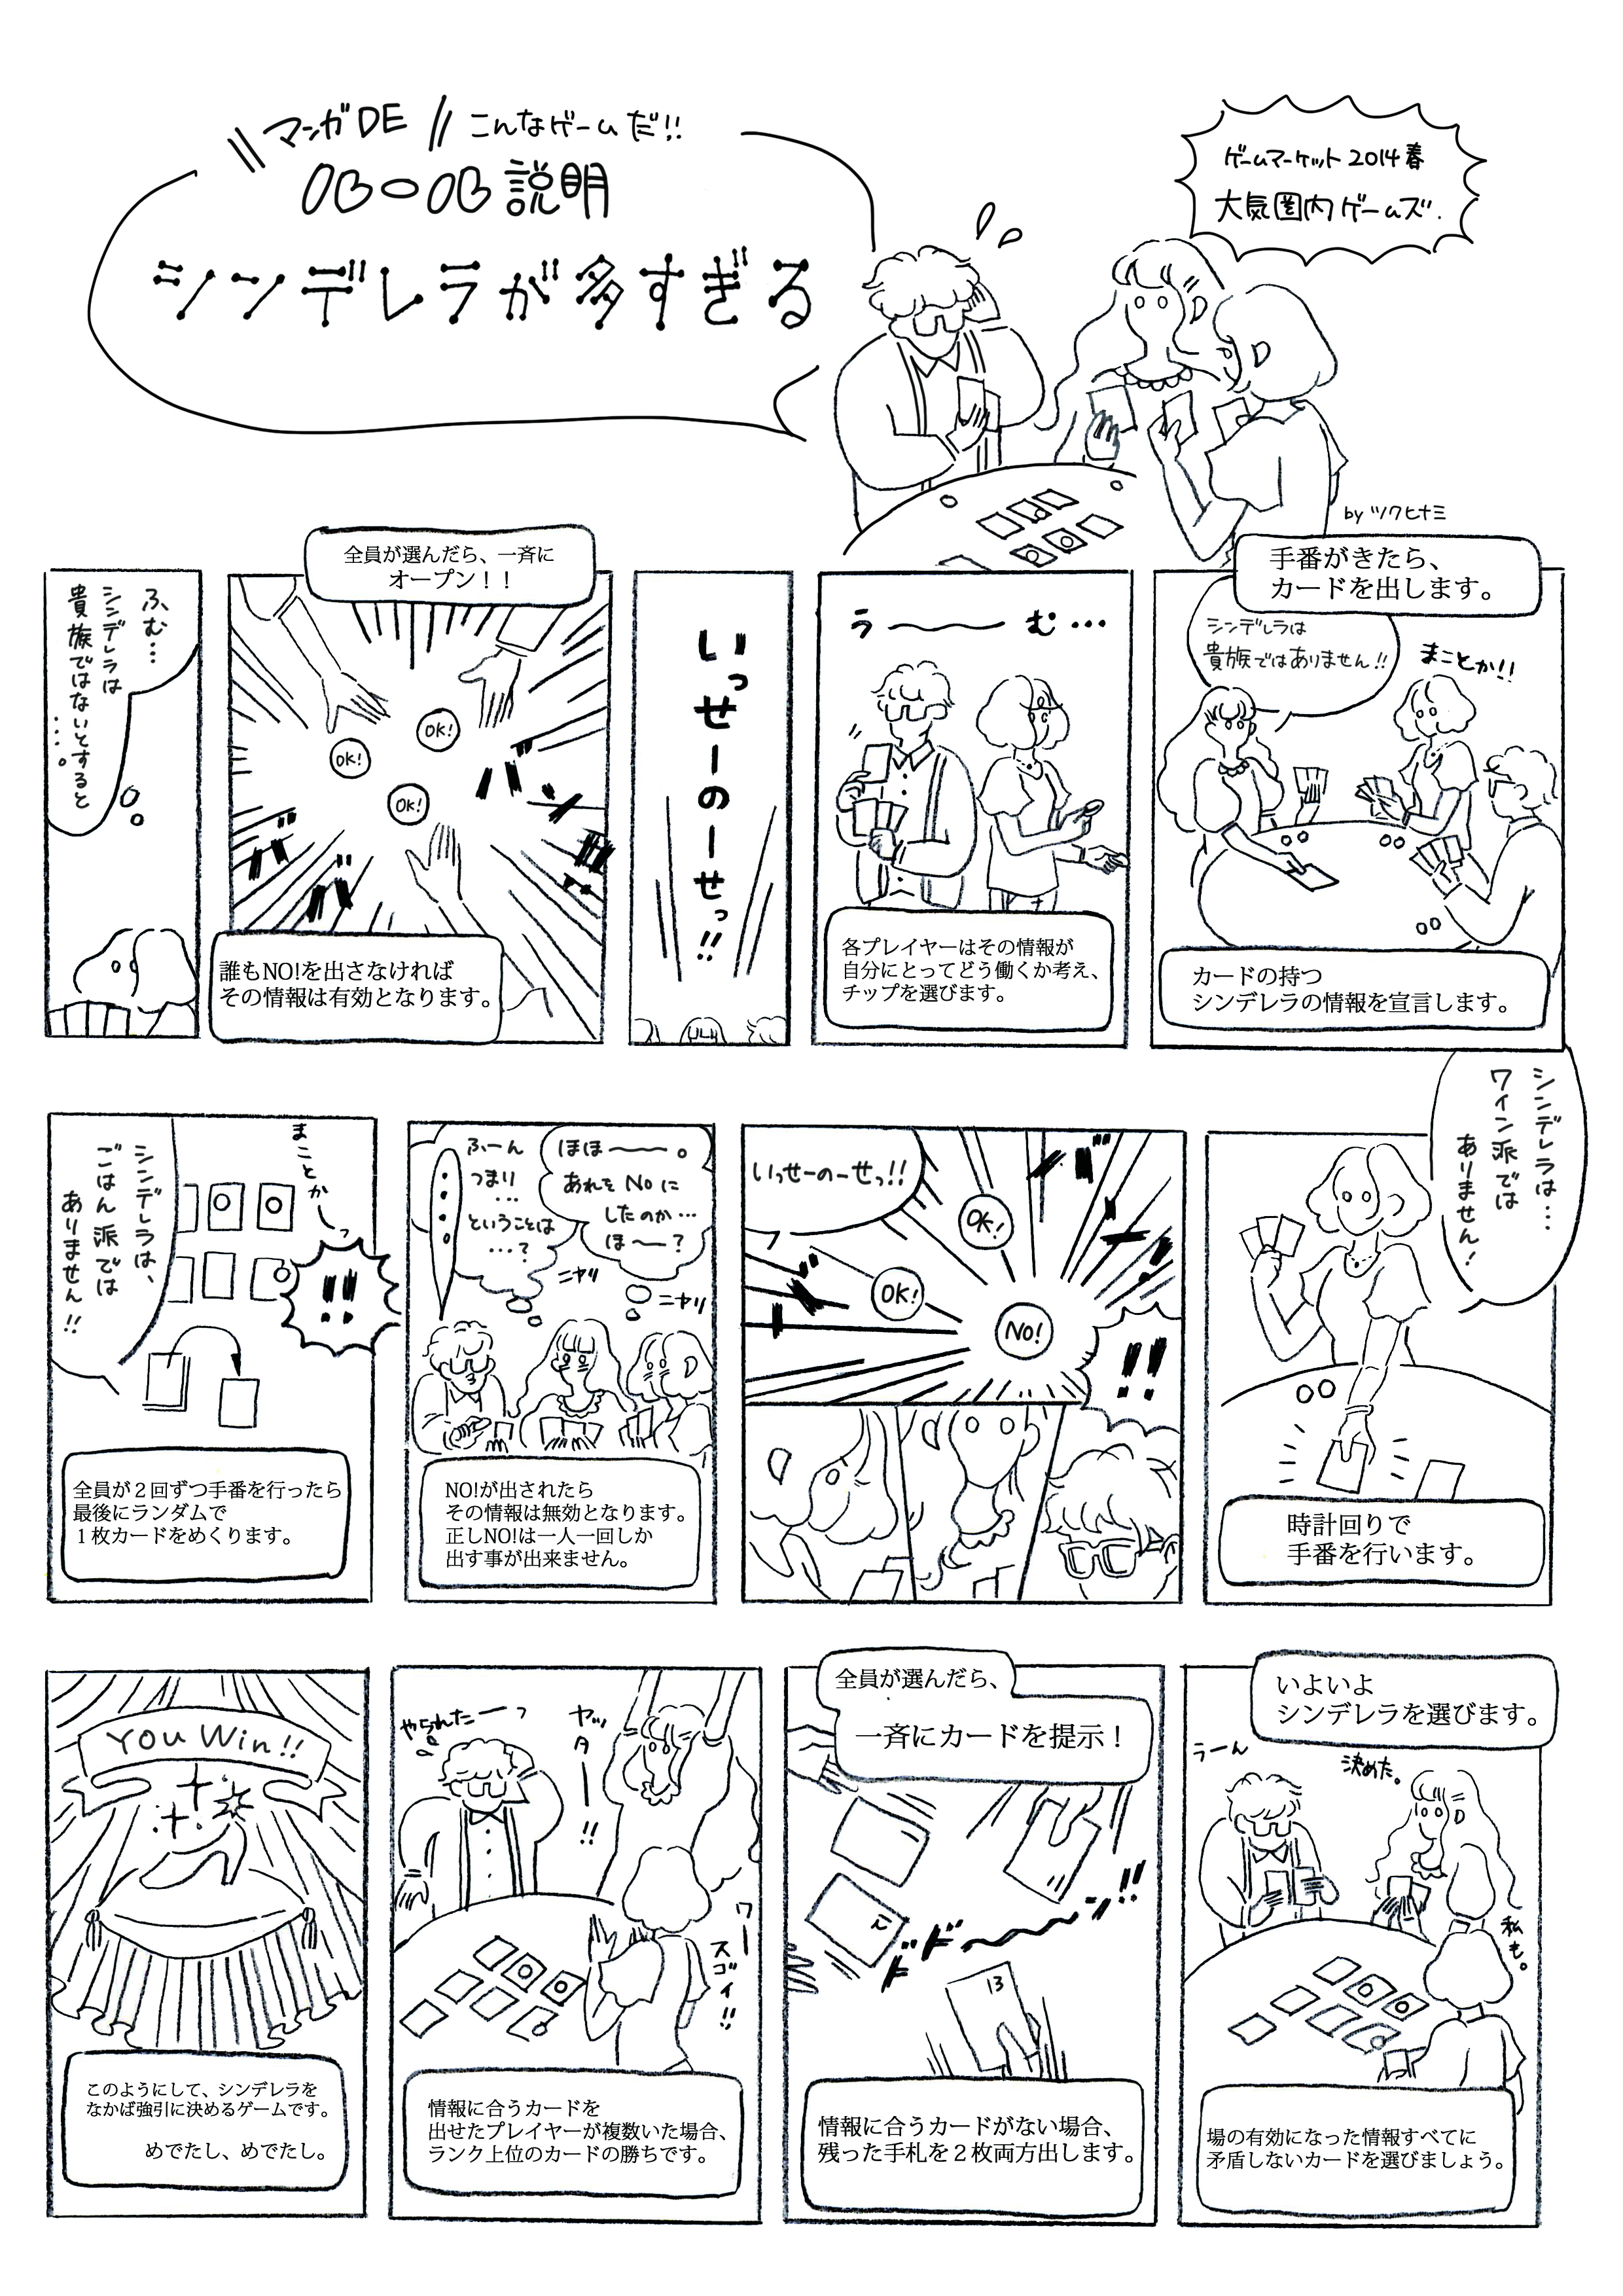 http://taikikennai.com/images/cinderella-manga.jpg